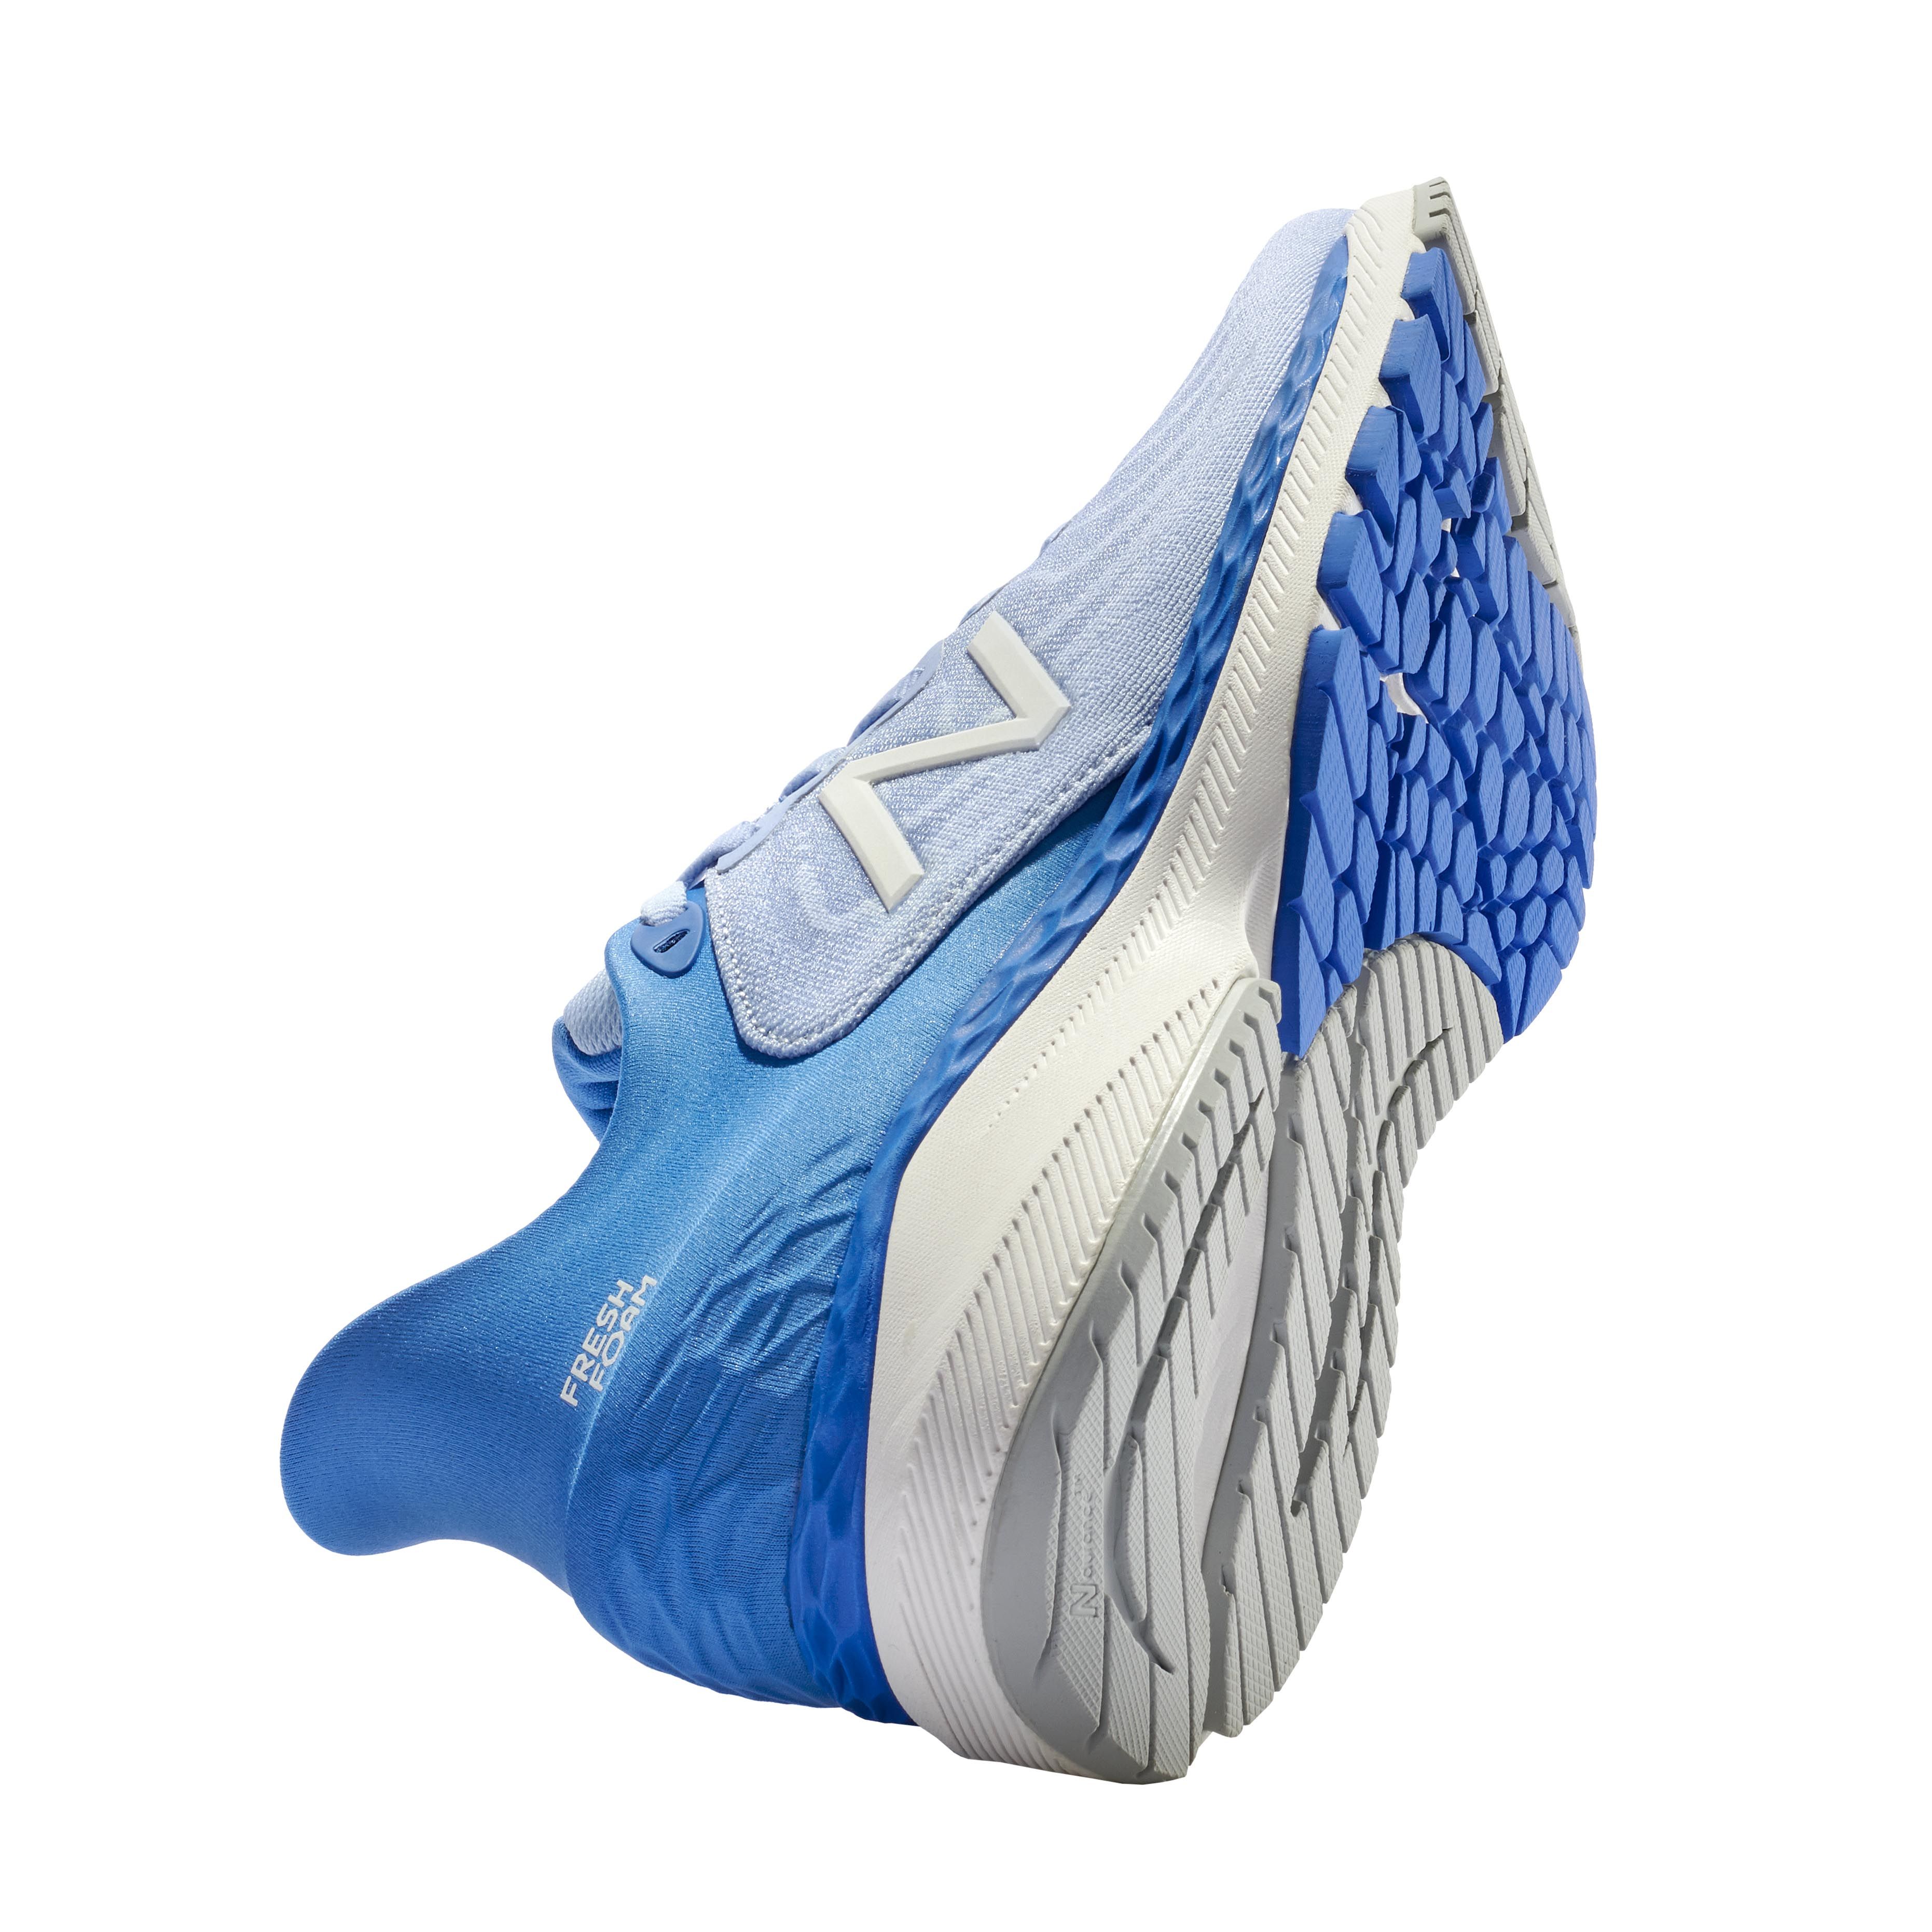 Best running shoes 2020 - New Balance 860v11